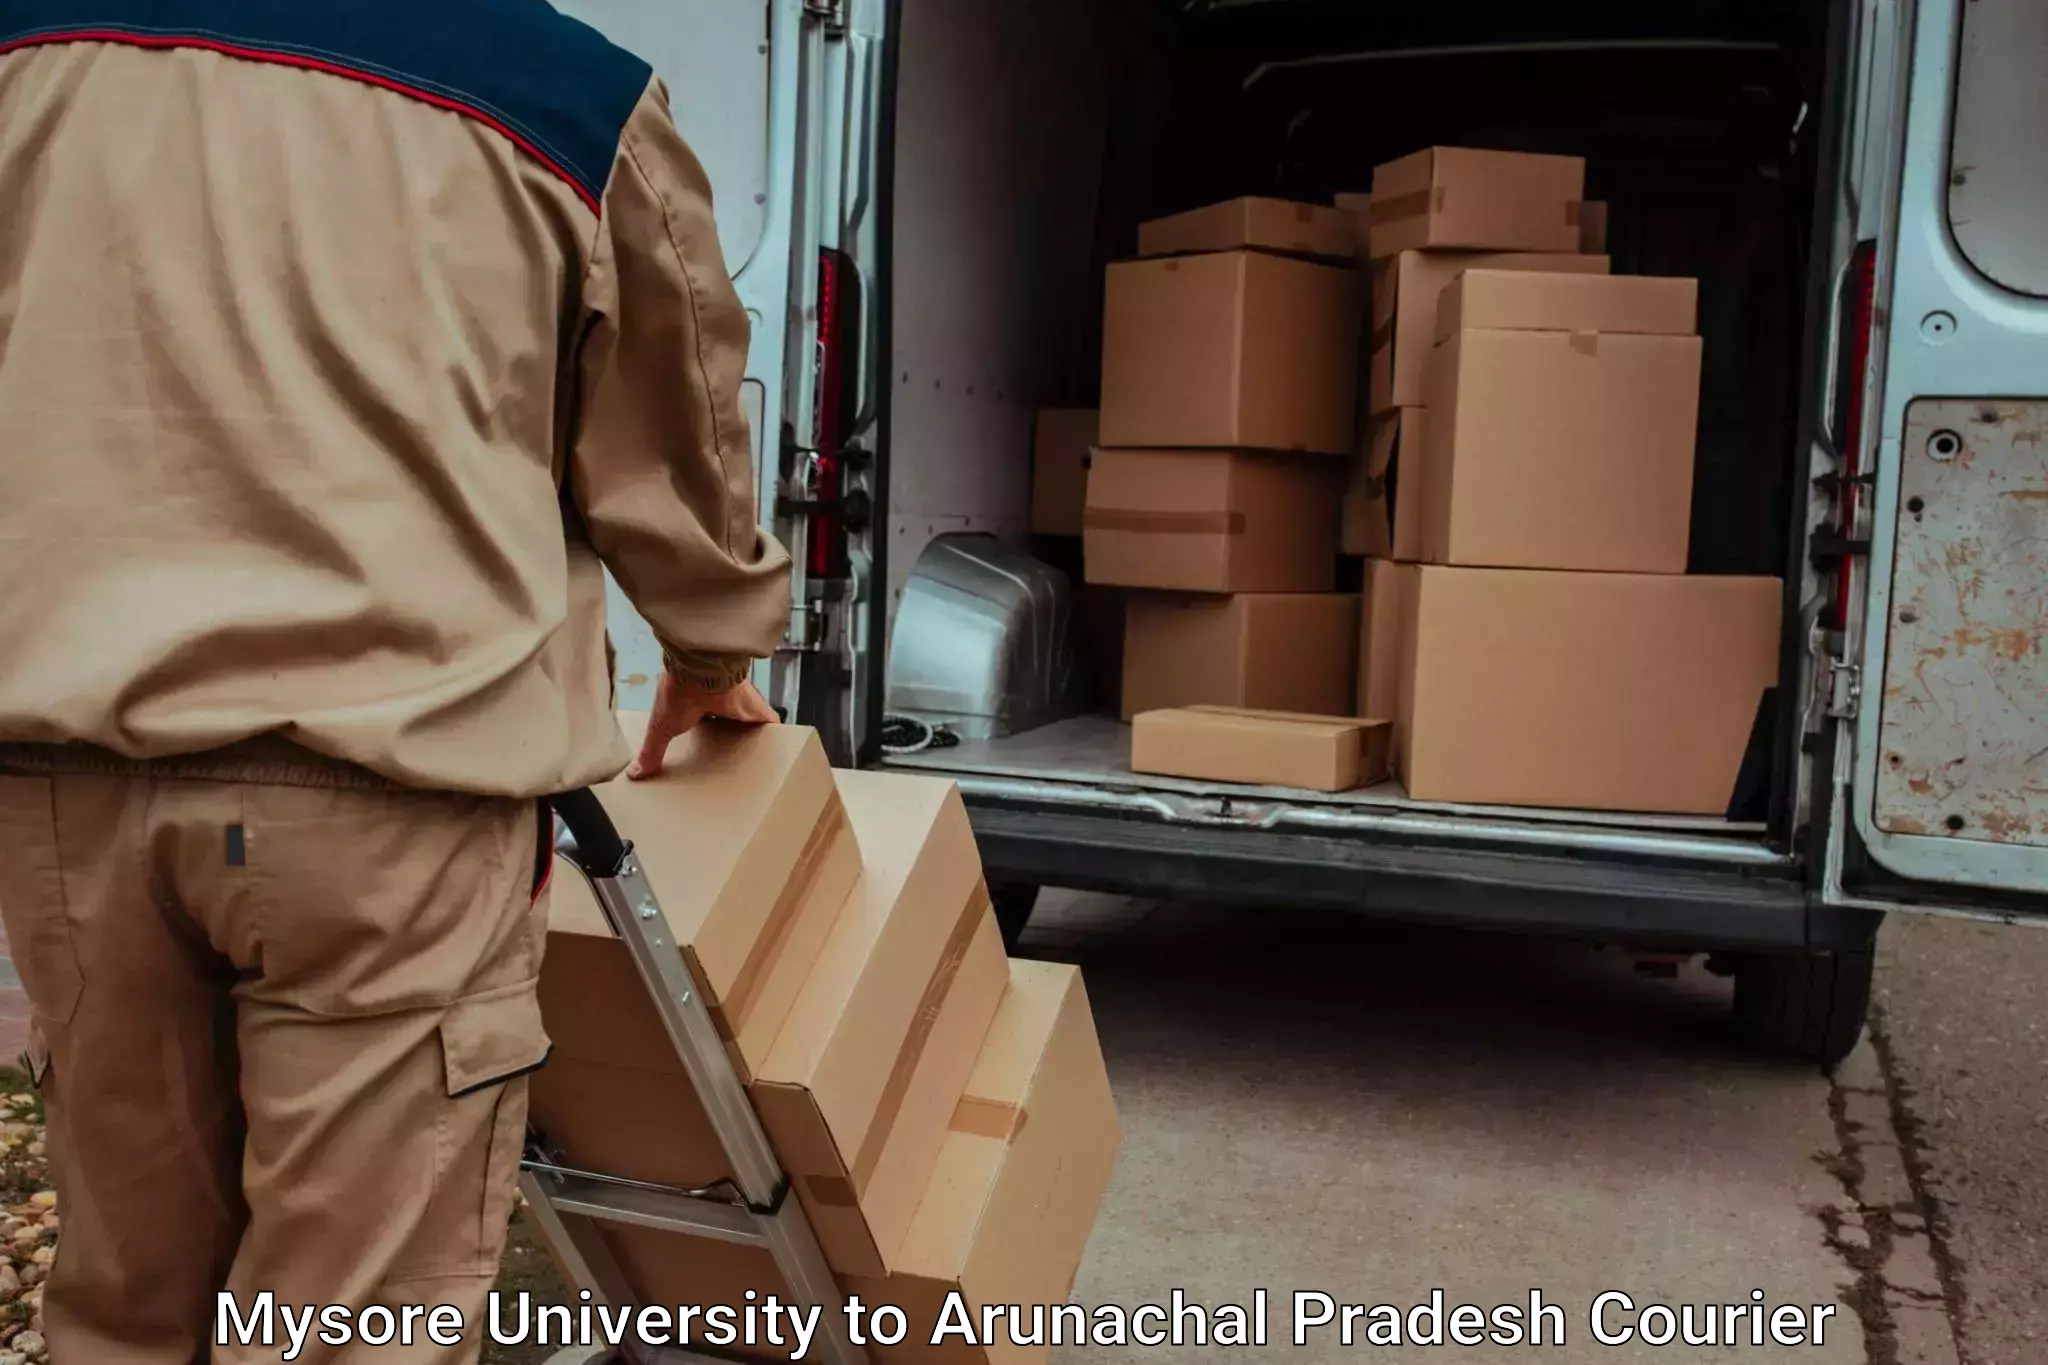 Baggage transport professionals Mysore University to Arunachal Pradesh